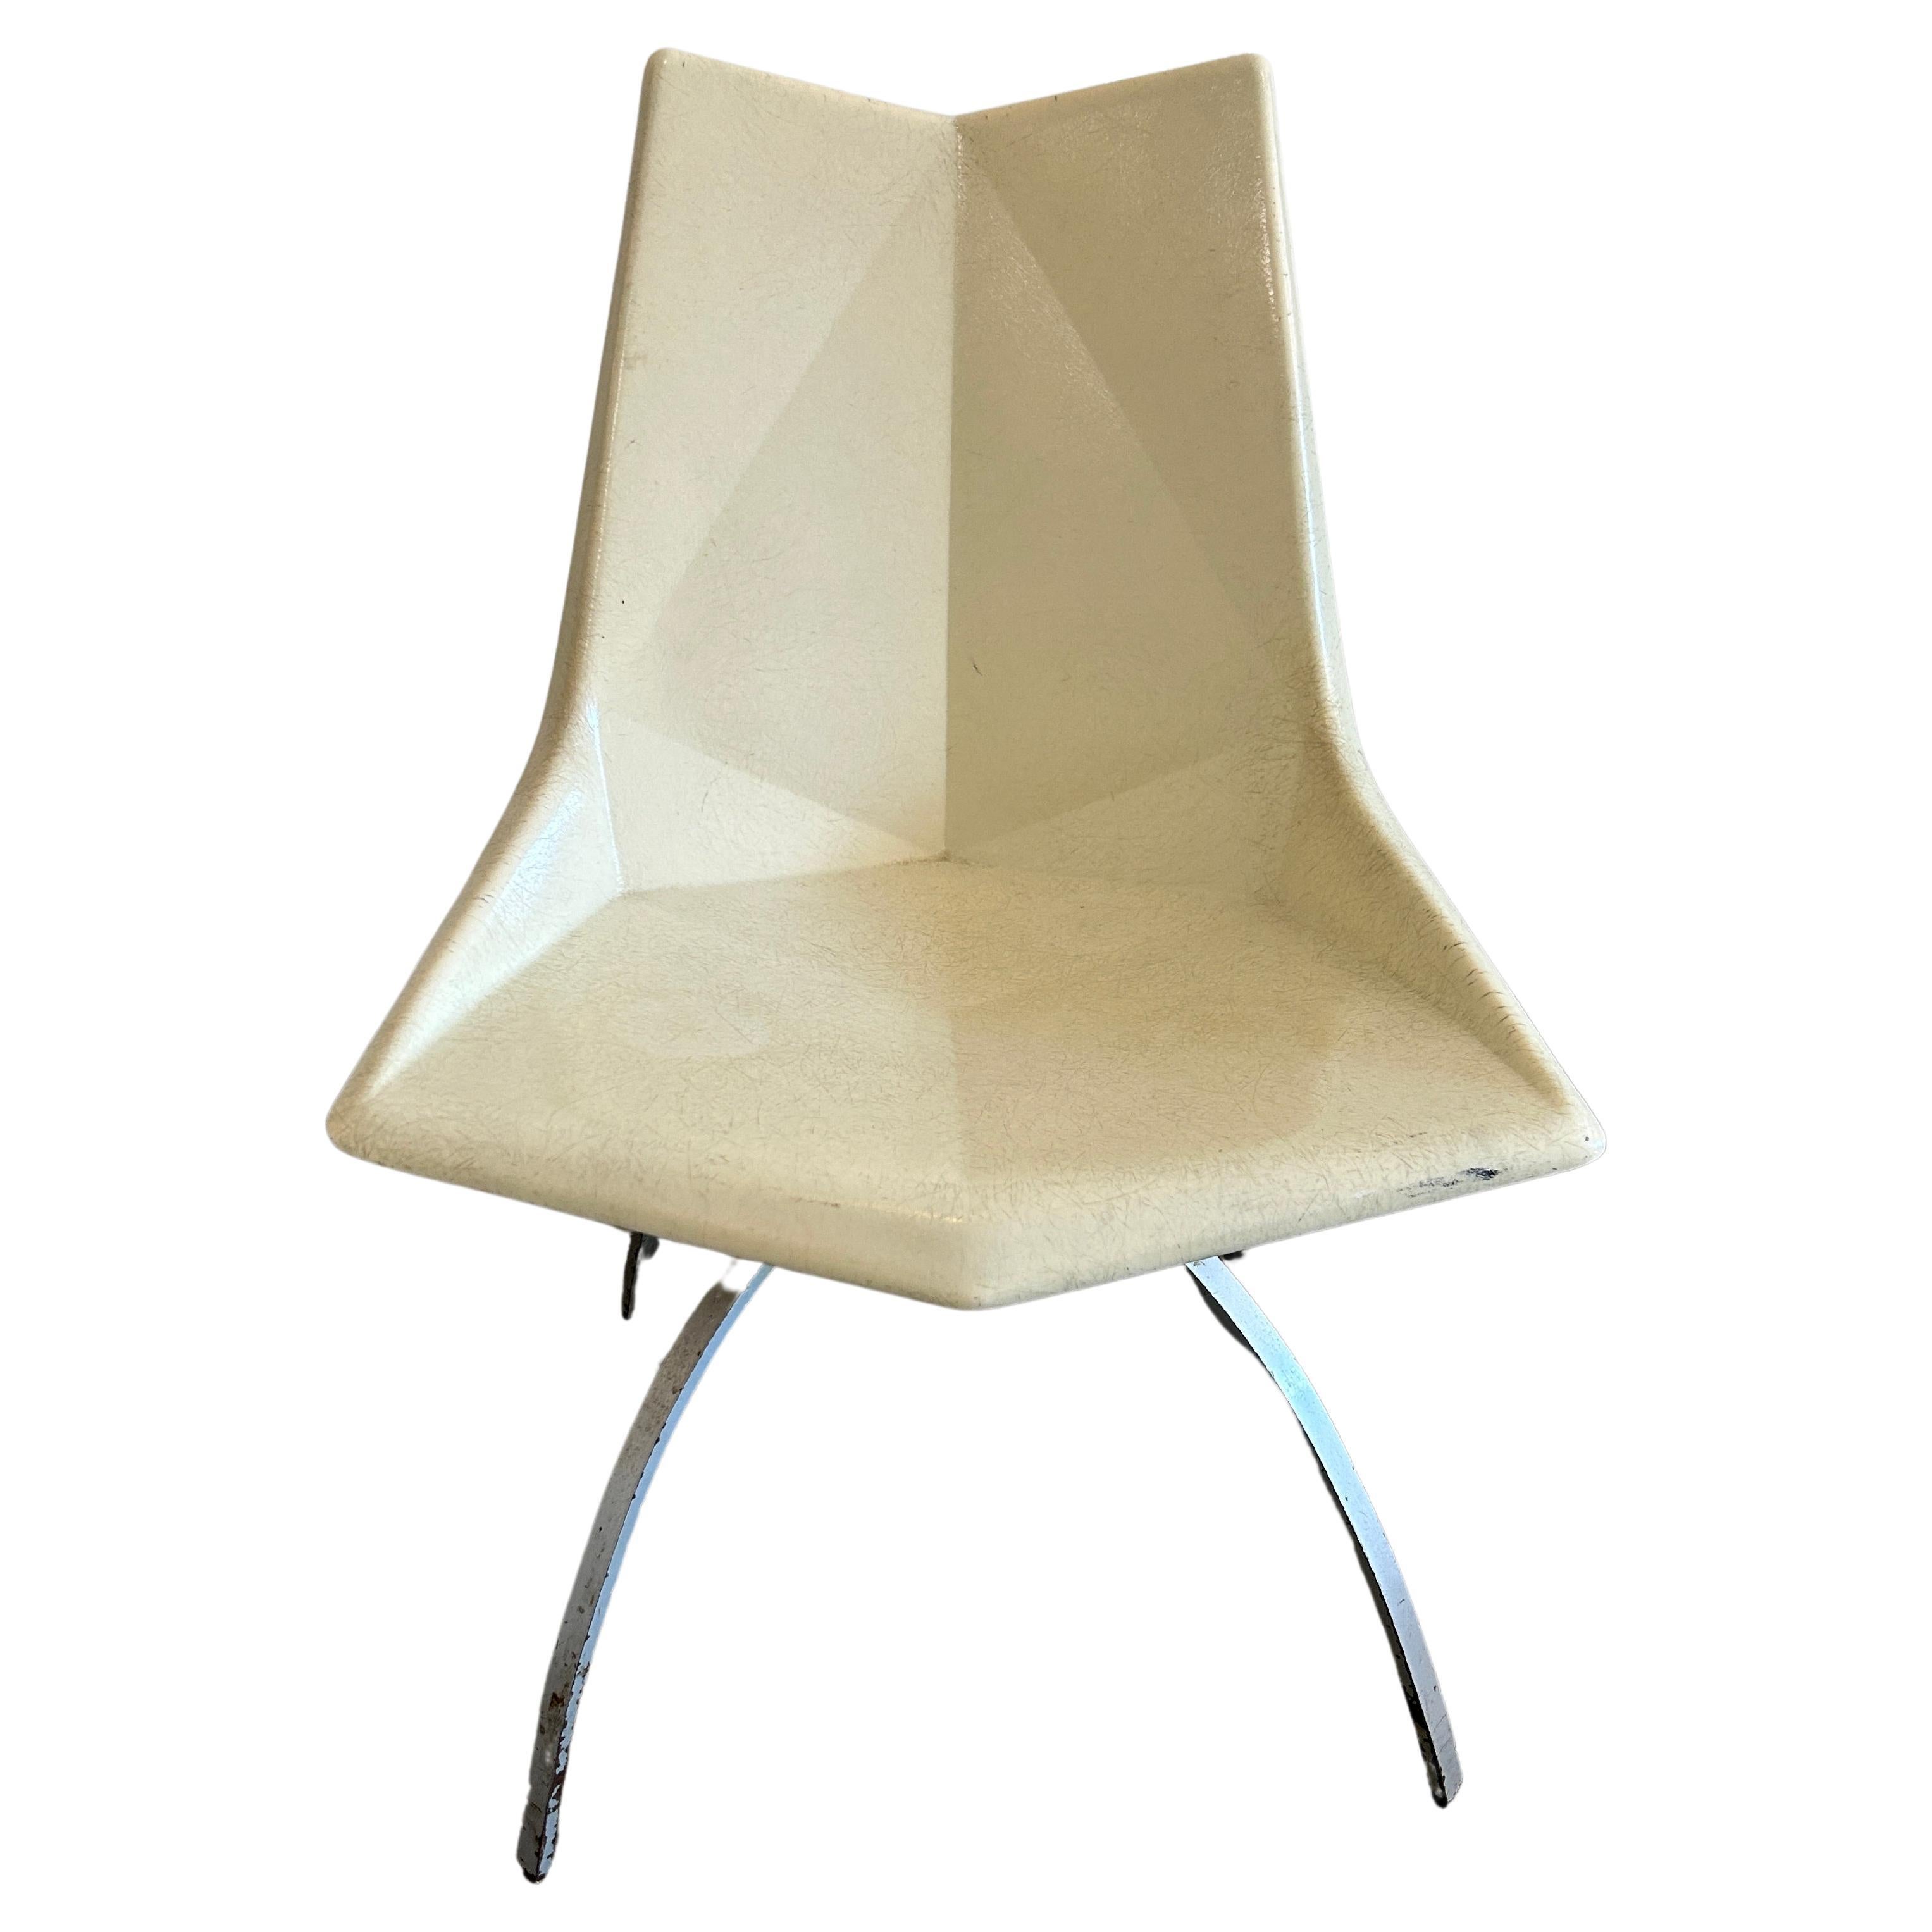  Original Midcentury white Paul McCobb Origami Chair Fiberglass spider base